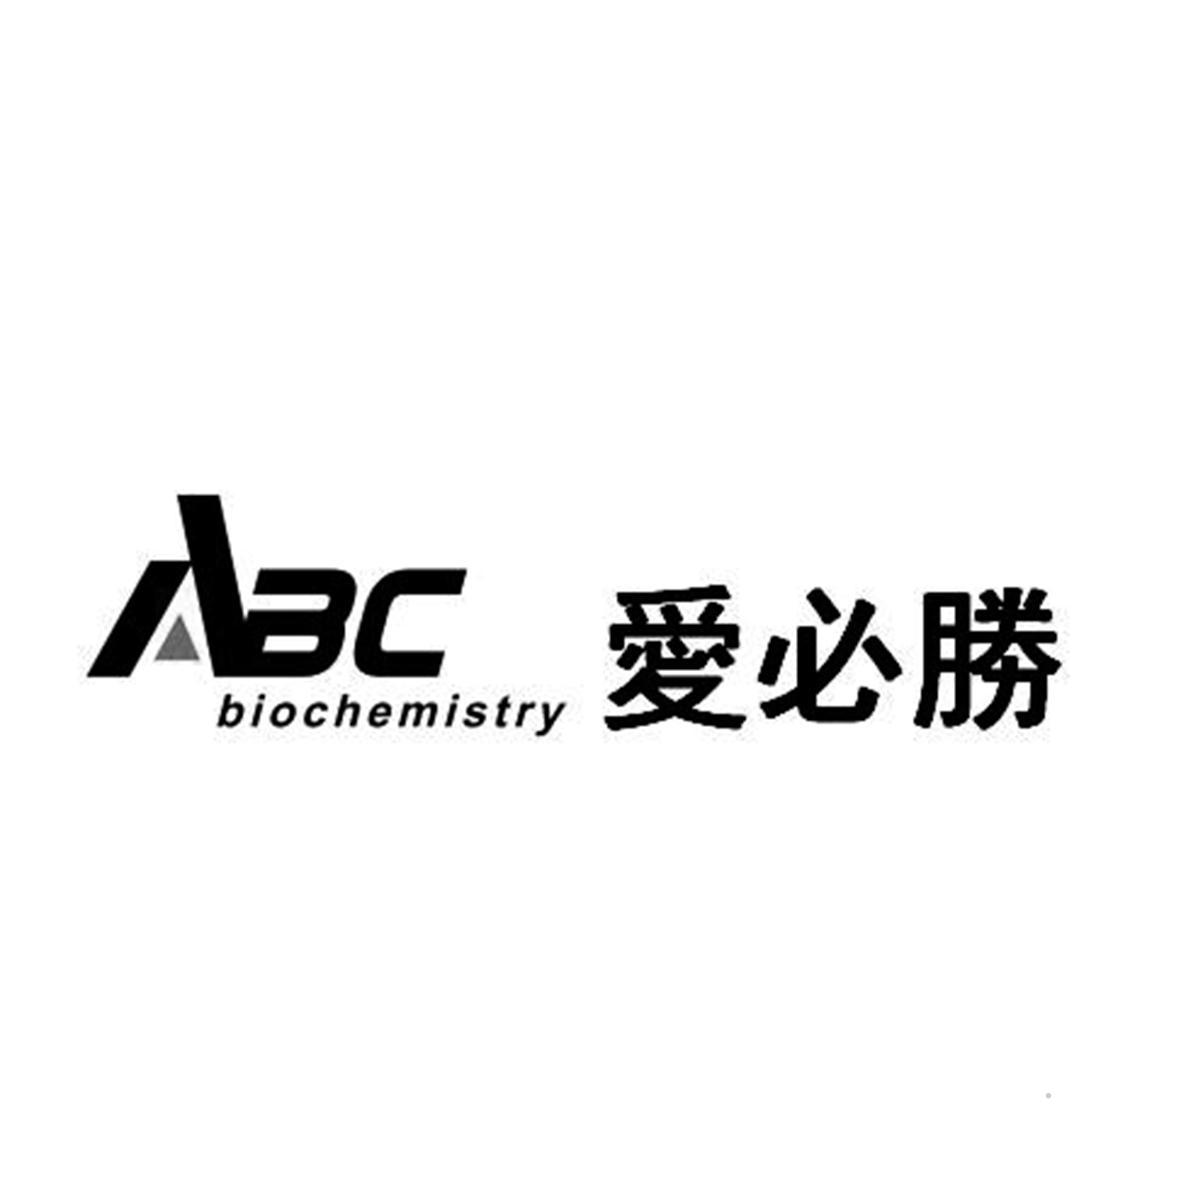 ABC BIOCHEMISTRY 爱必胜logo